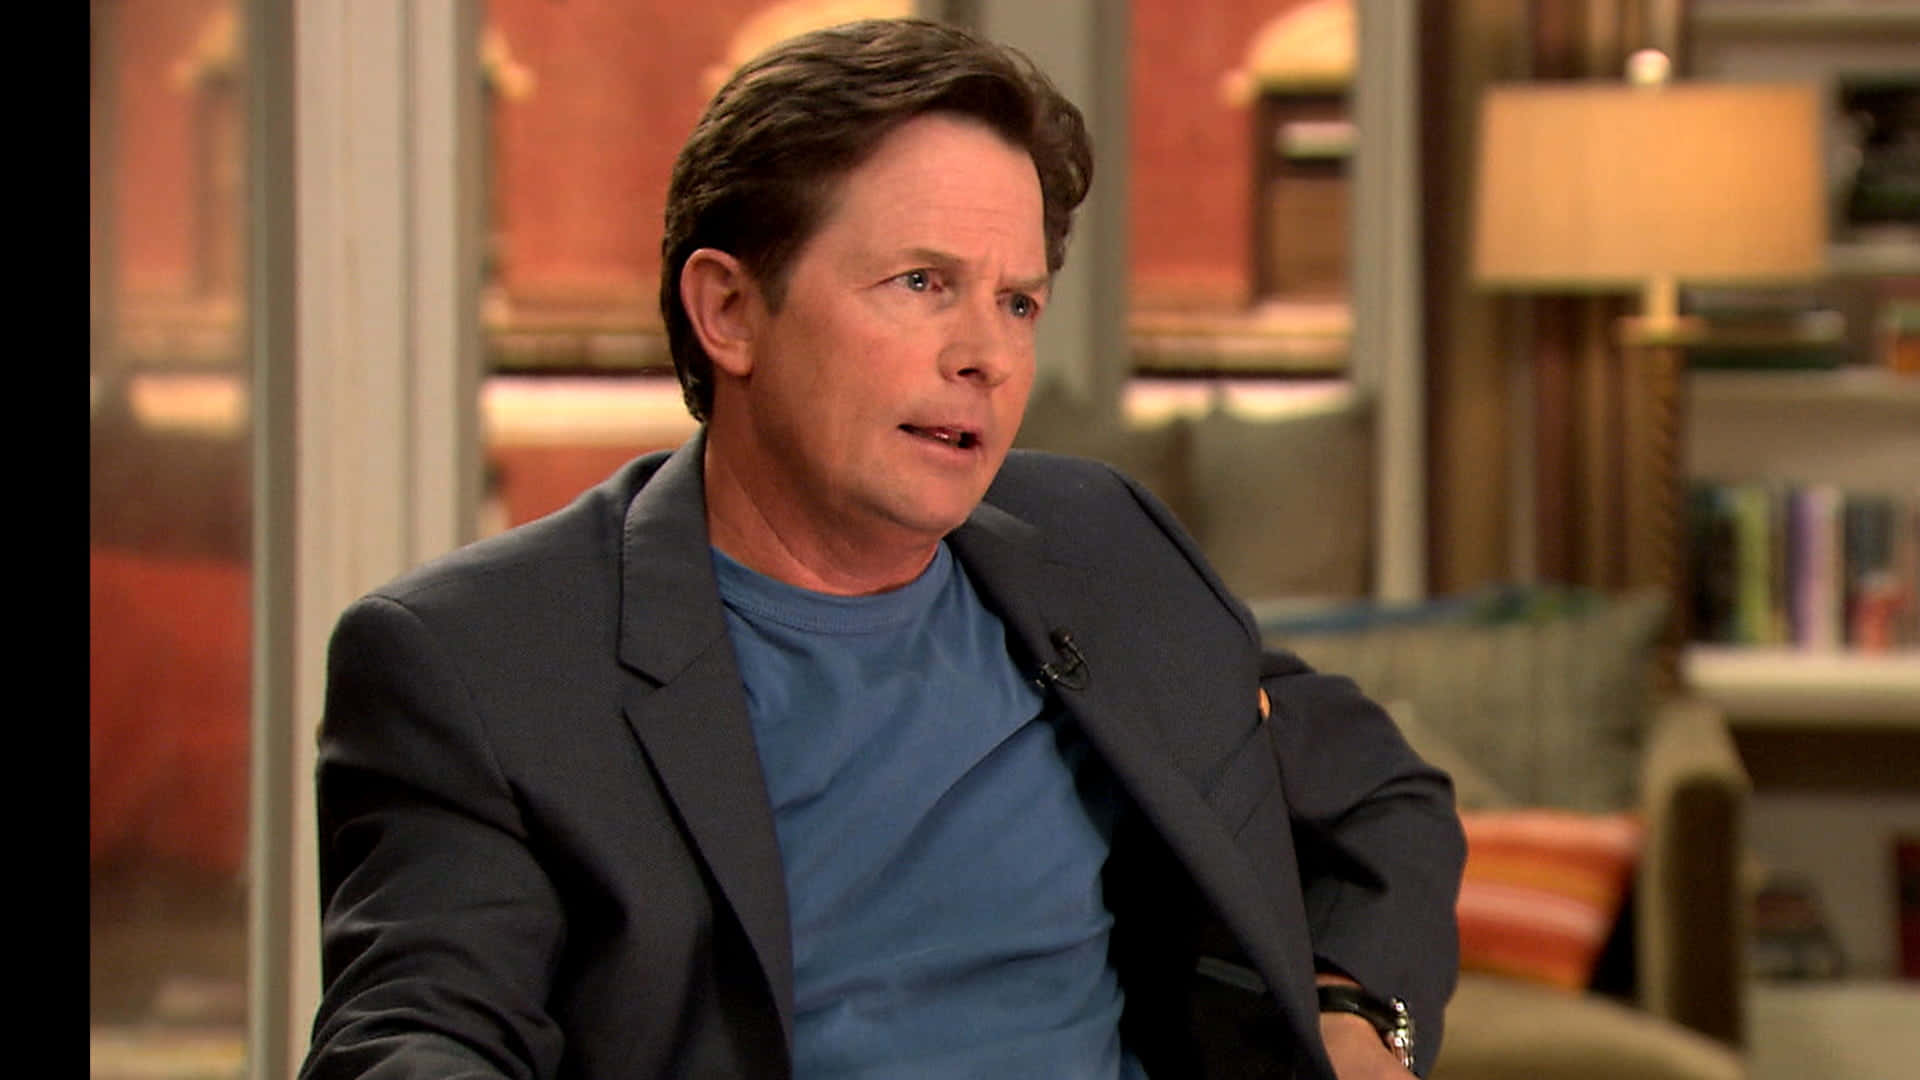 Michael J. Fox, A Legendary Actor Background